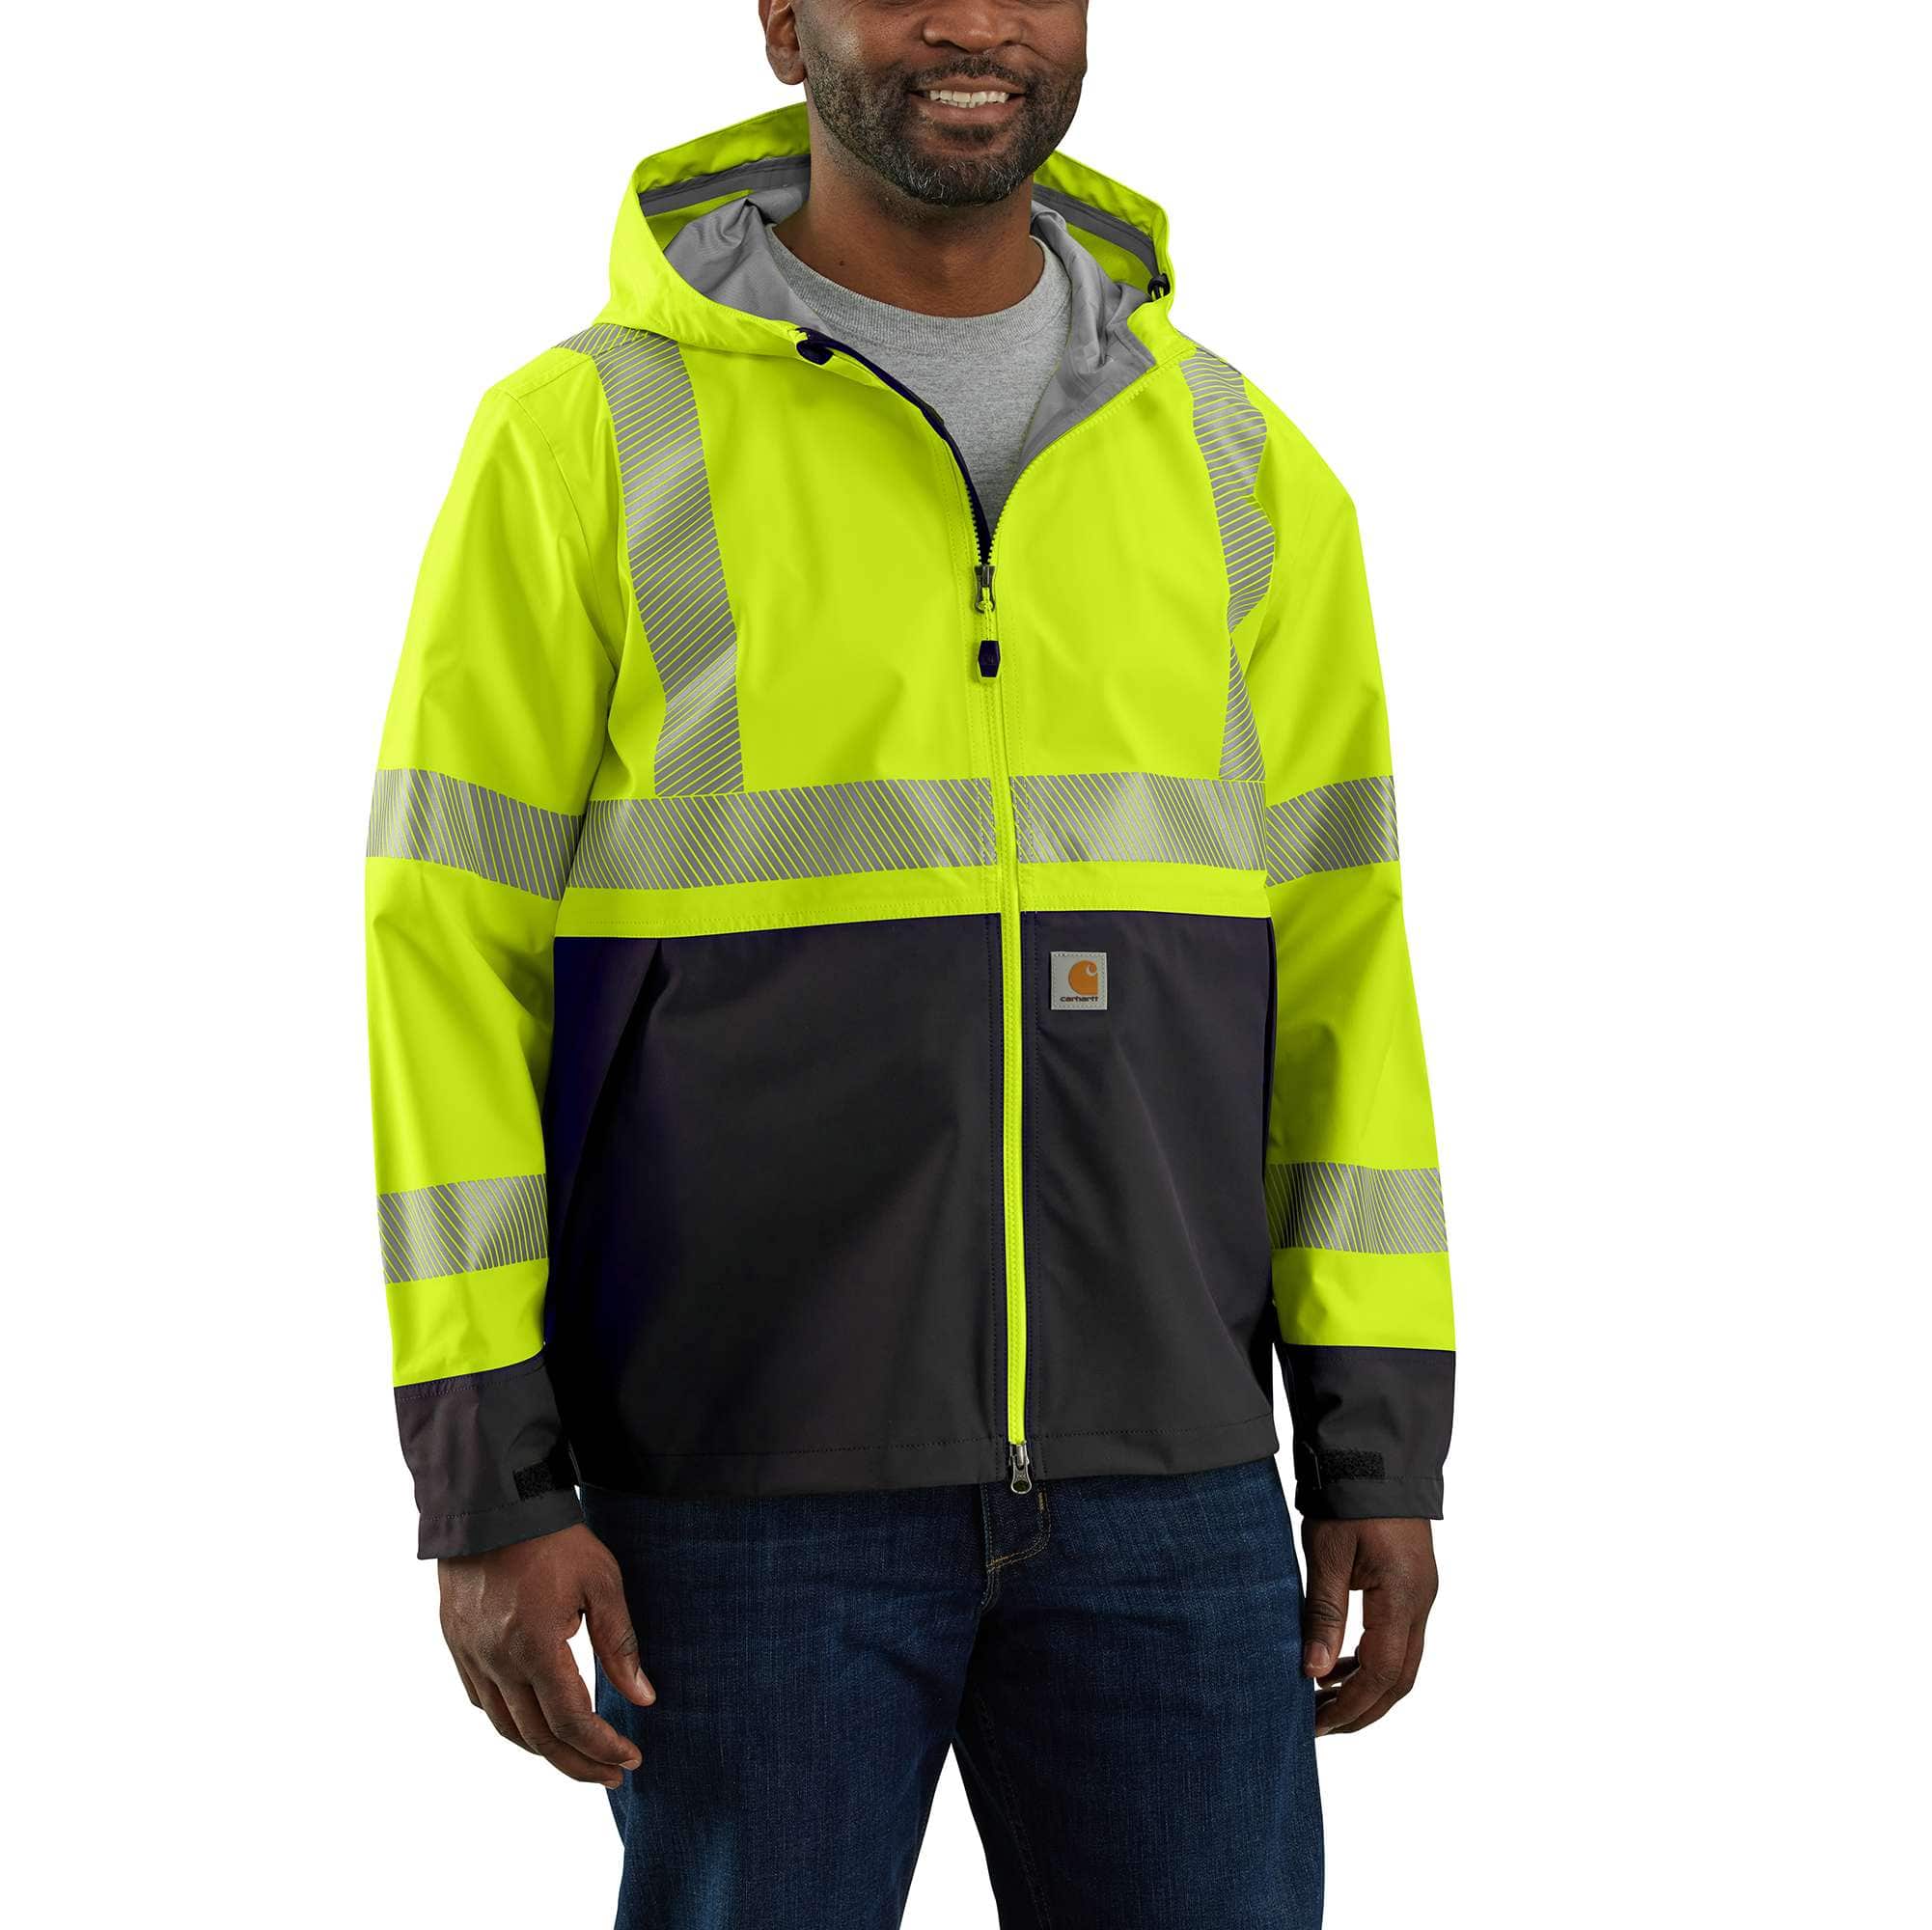 Custom High Visibility Gear & Safety Uniforms